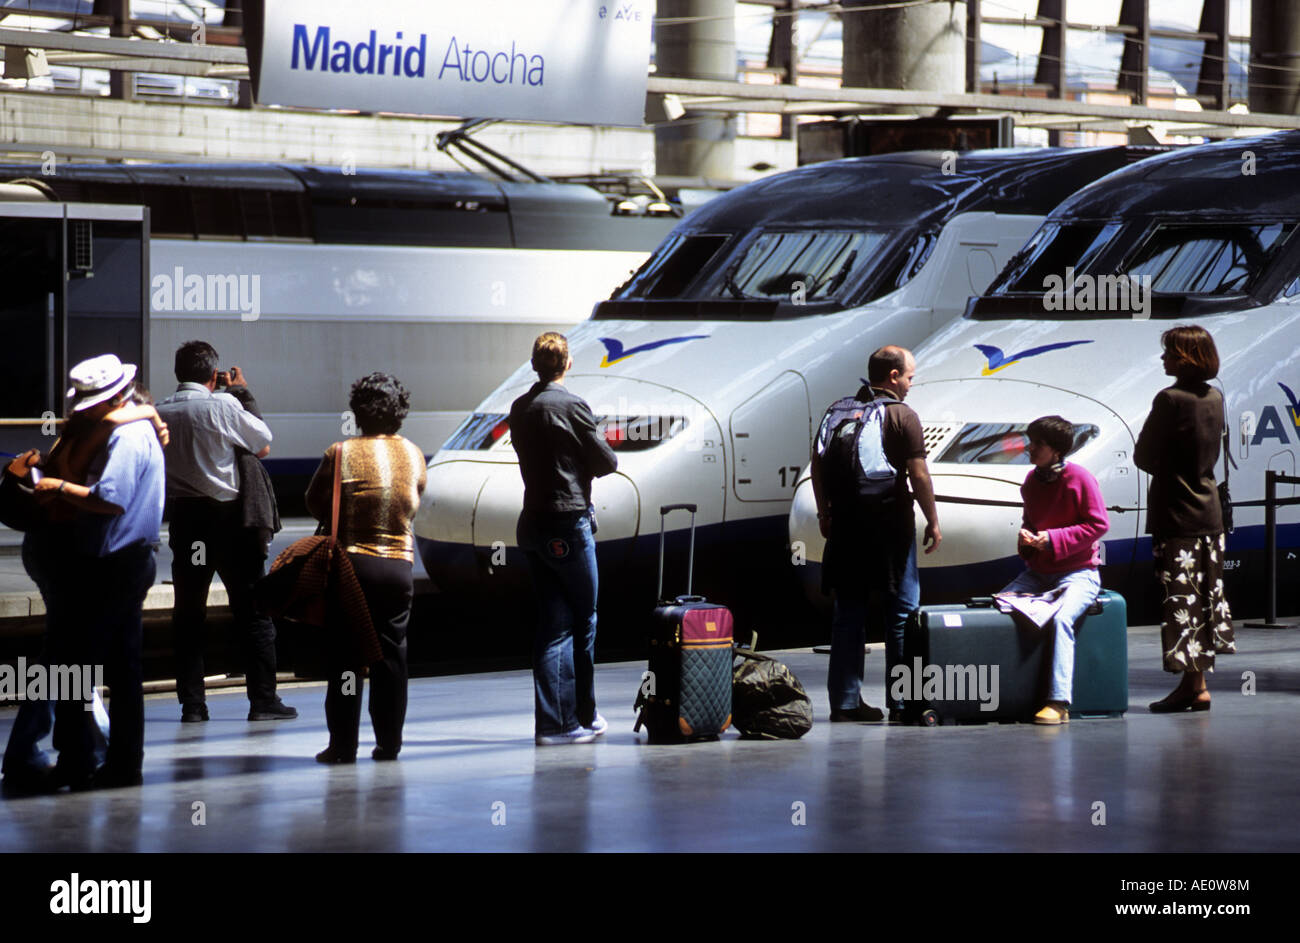 Passengers waiting at Atocha railway station, Madrid, Spain. Stock Photo